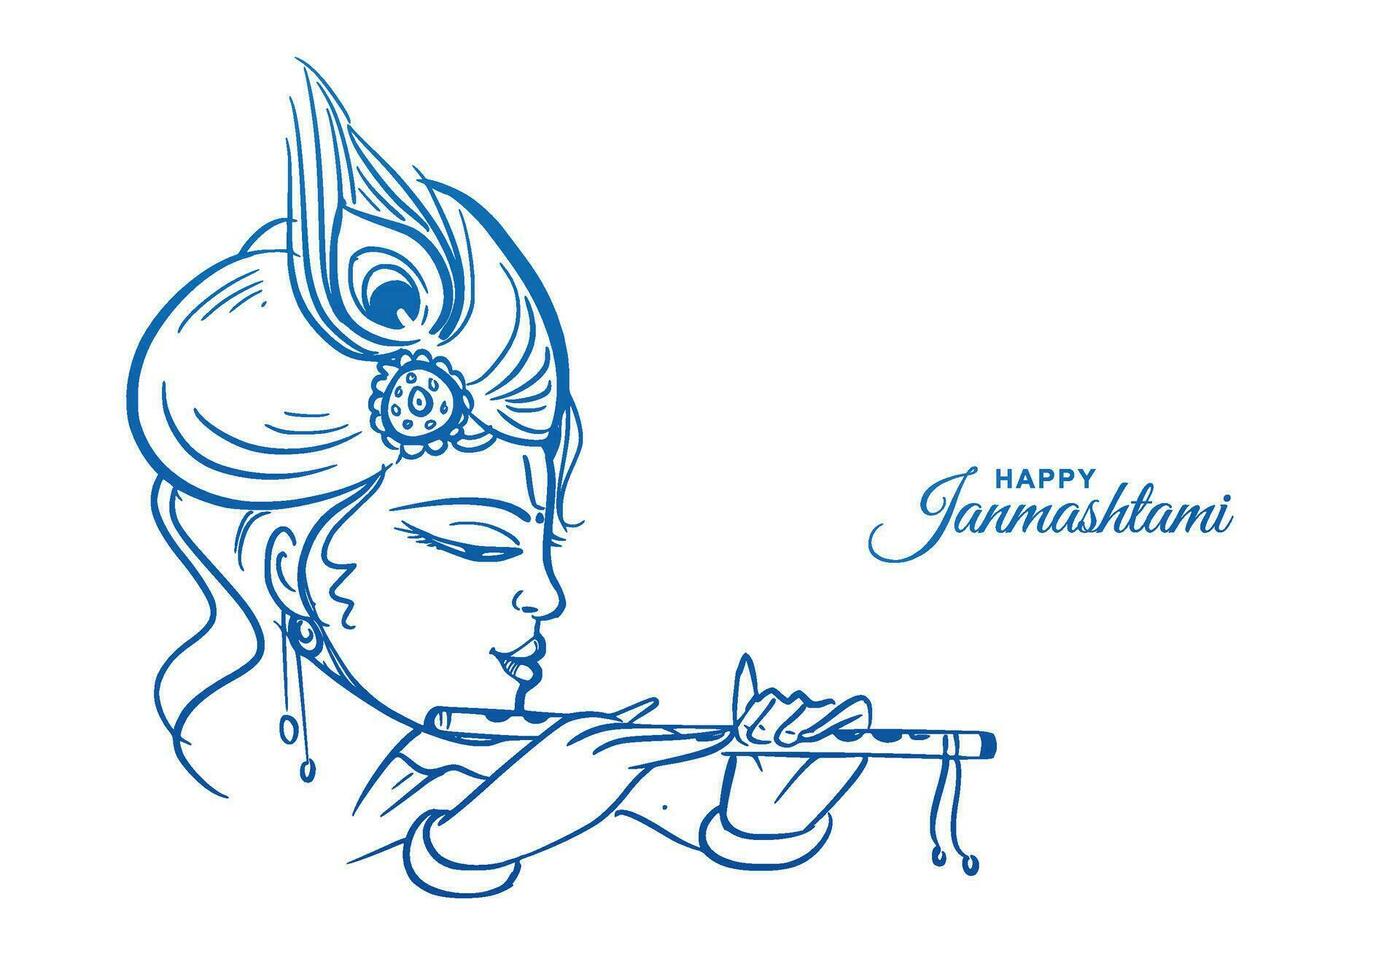 Janmashtami drawing: Krishna, matki, mor pankh and bansuri drawing ideas |  News9live